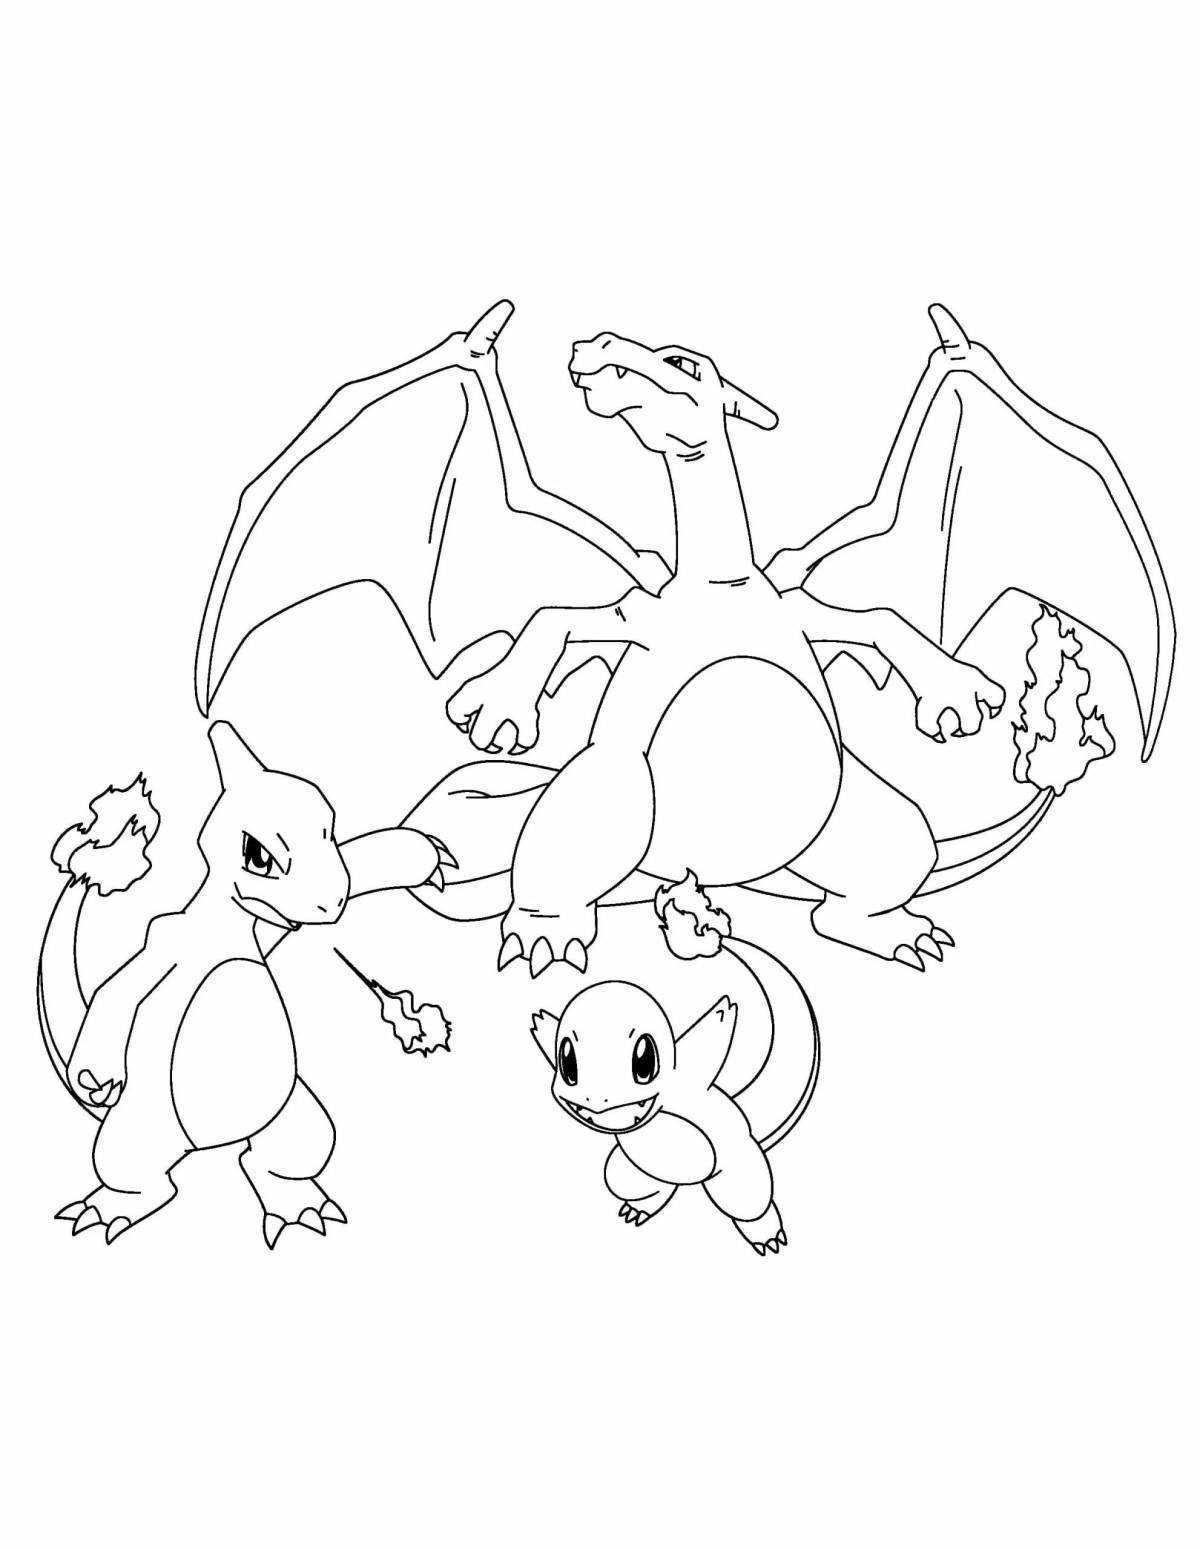 Charizard pokemon dramatic coloring book